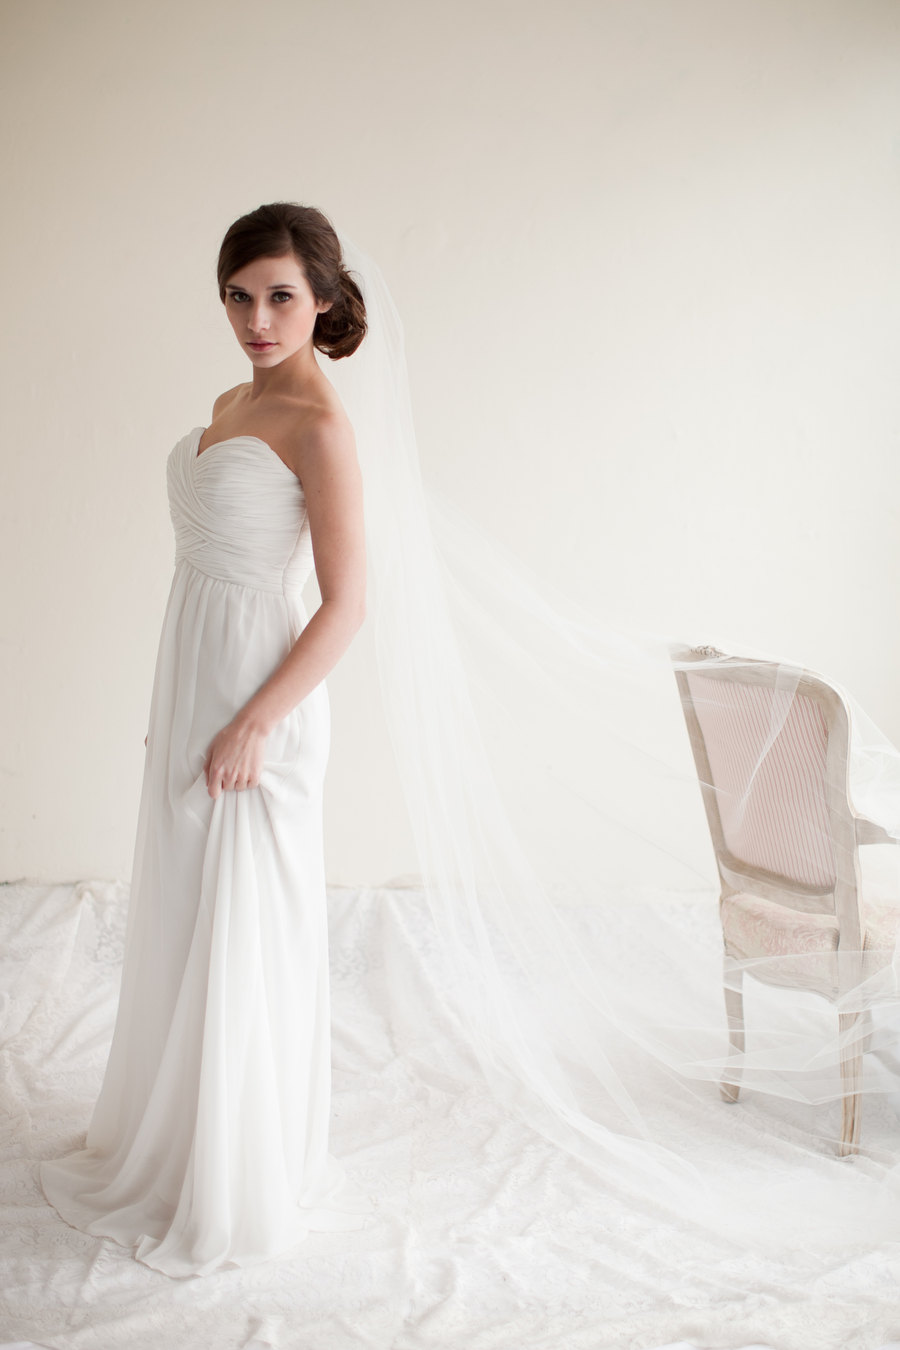 Melinda Rose Design bridal veil shoot. Atlas and Elia Photography.